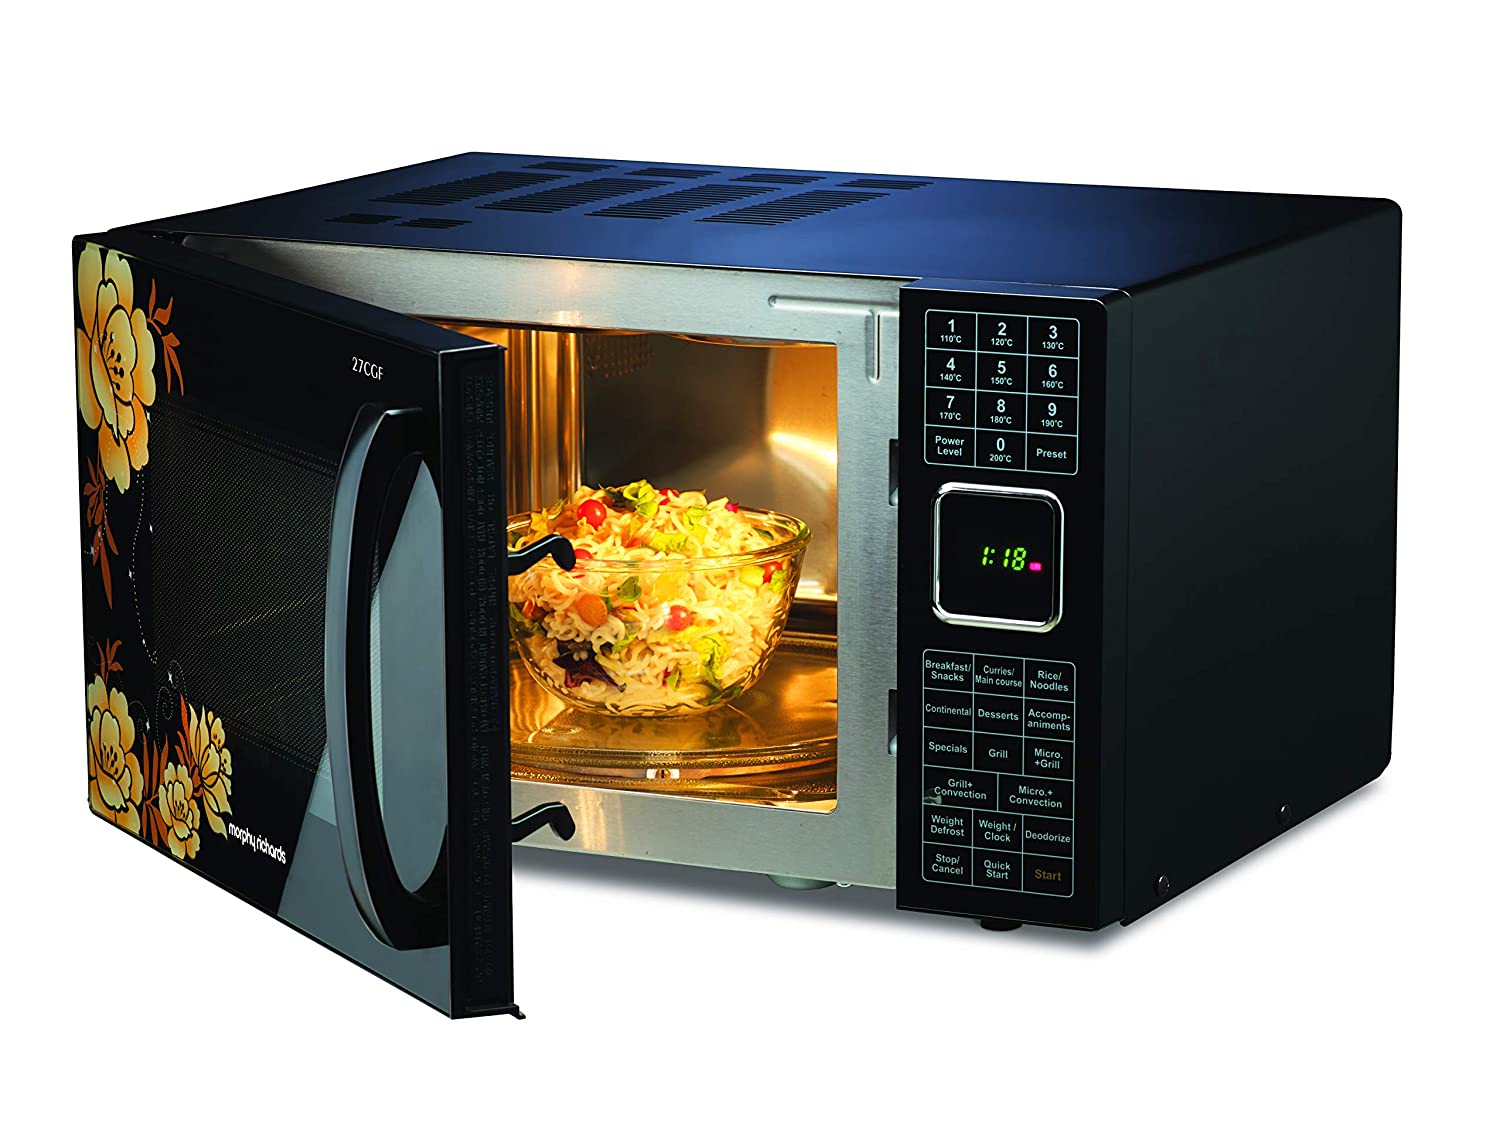 Morphy Richards 27 Ltr Floral Design Microwave Convection Oven with 200 Autocook Menus, Black, Regular